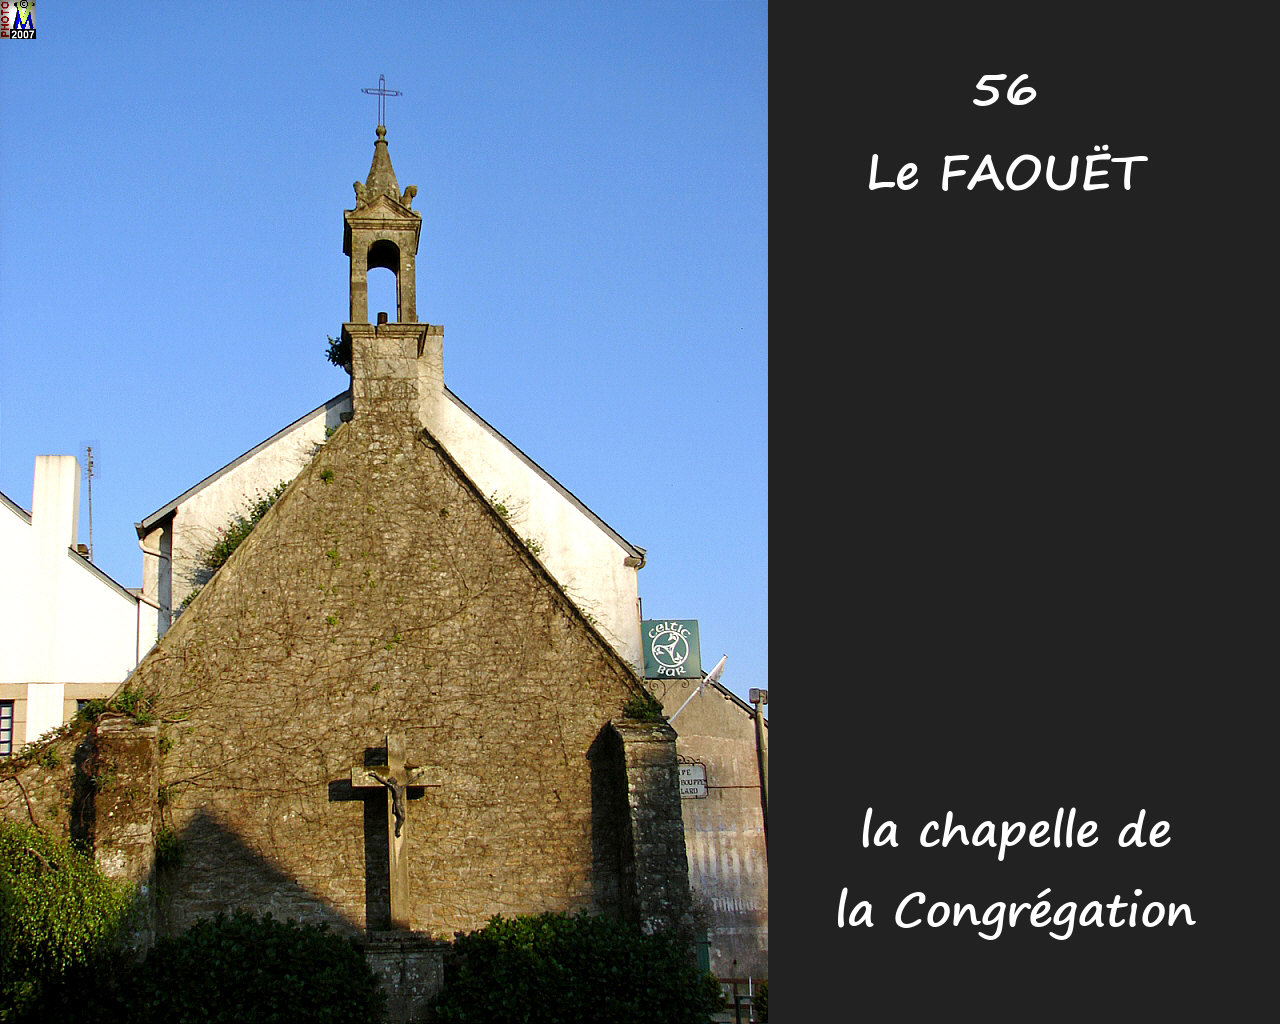 56FAOUET_chapelle-congre_100.jpg